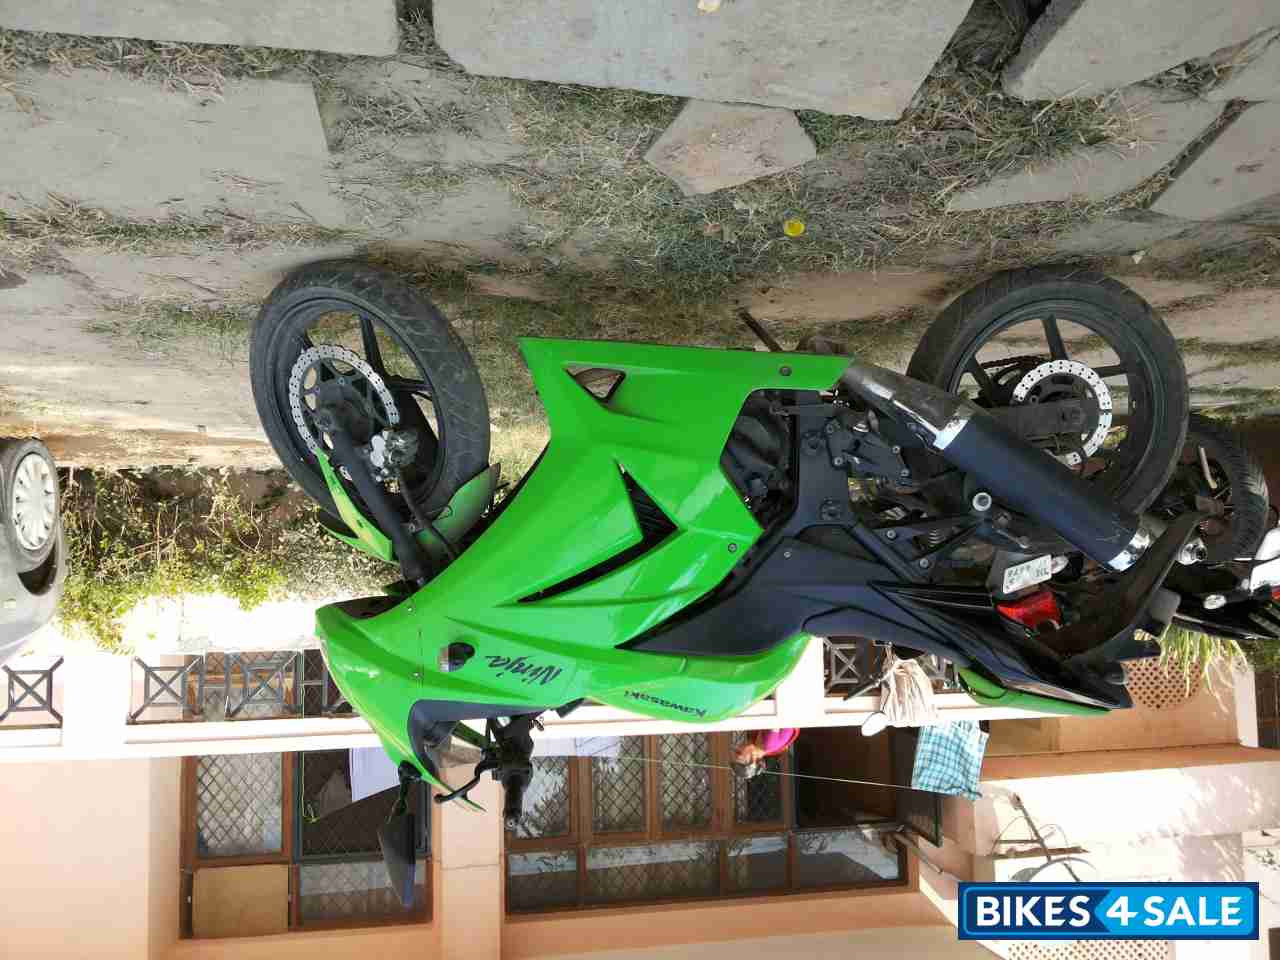 Lime Green Kawasaki Ninja 250R for sale in New Delhi. Bike is in good ...